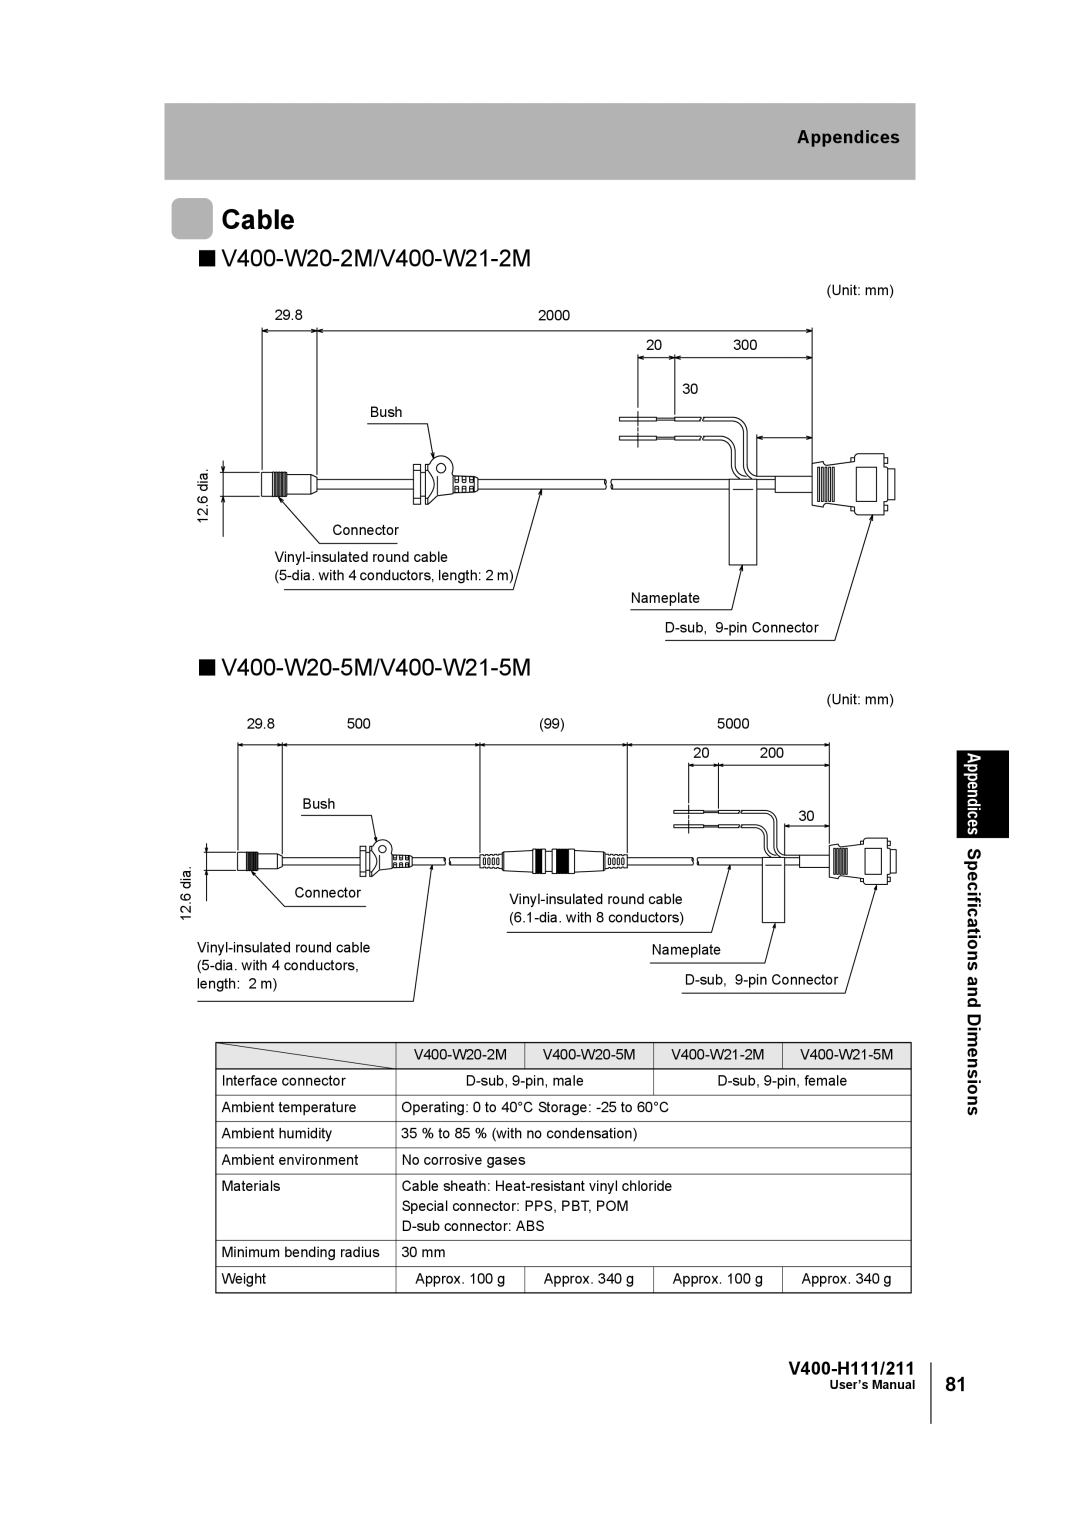 Omron V400-H111 user manual Cable, V400-W20-2M/V400-W21-2M, V400-W20-5M/V400-W21-5M 